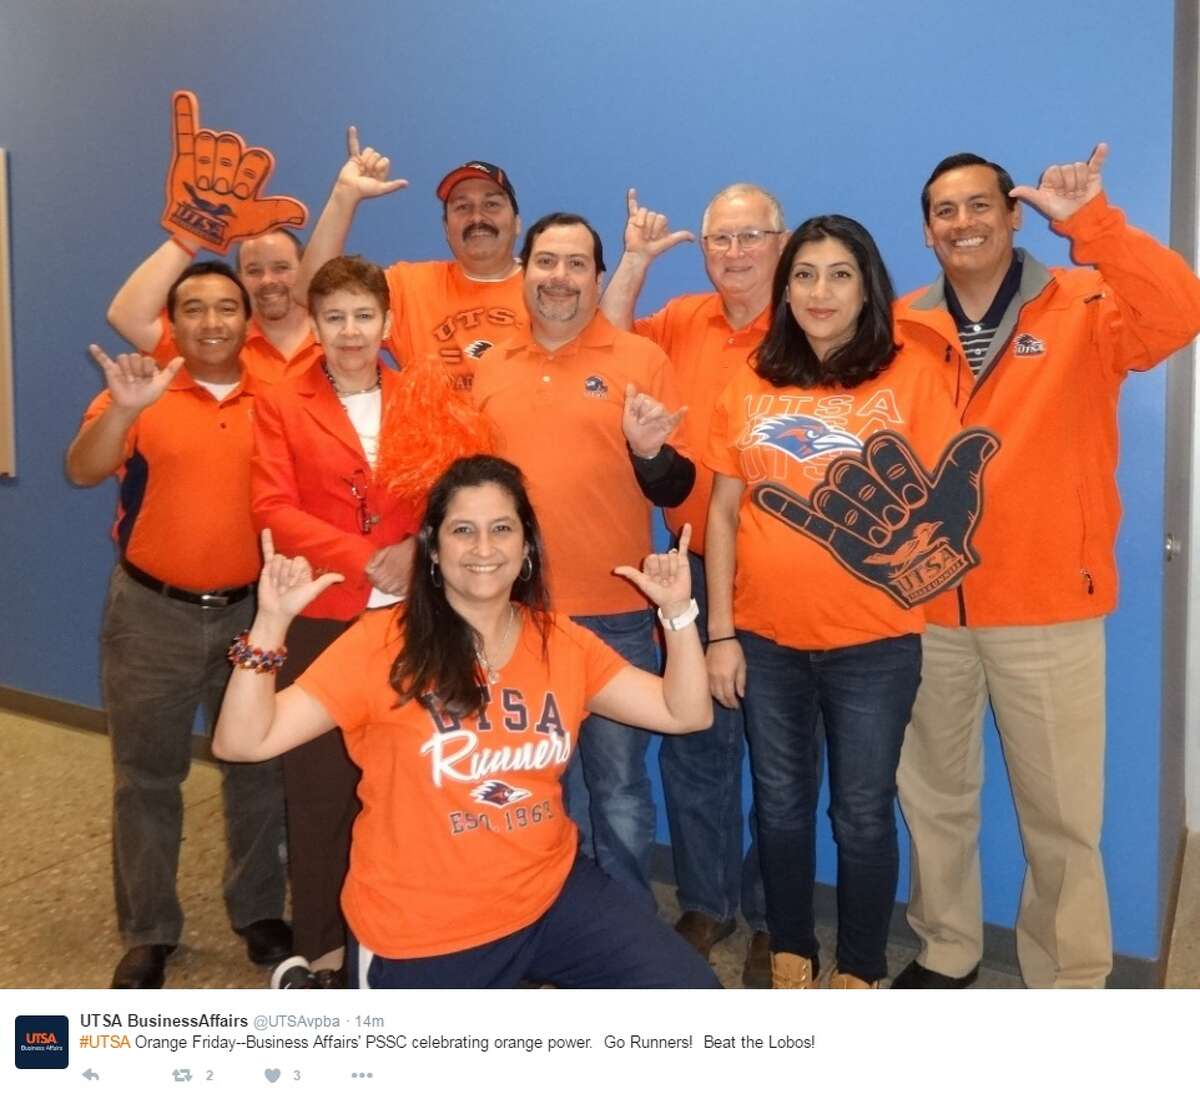 "#UTSA Orange Friday--Business Affairs' PSSC celebrating orange power.  Go Runners!  Beat the Lobos," @UTSAvpba.